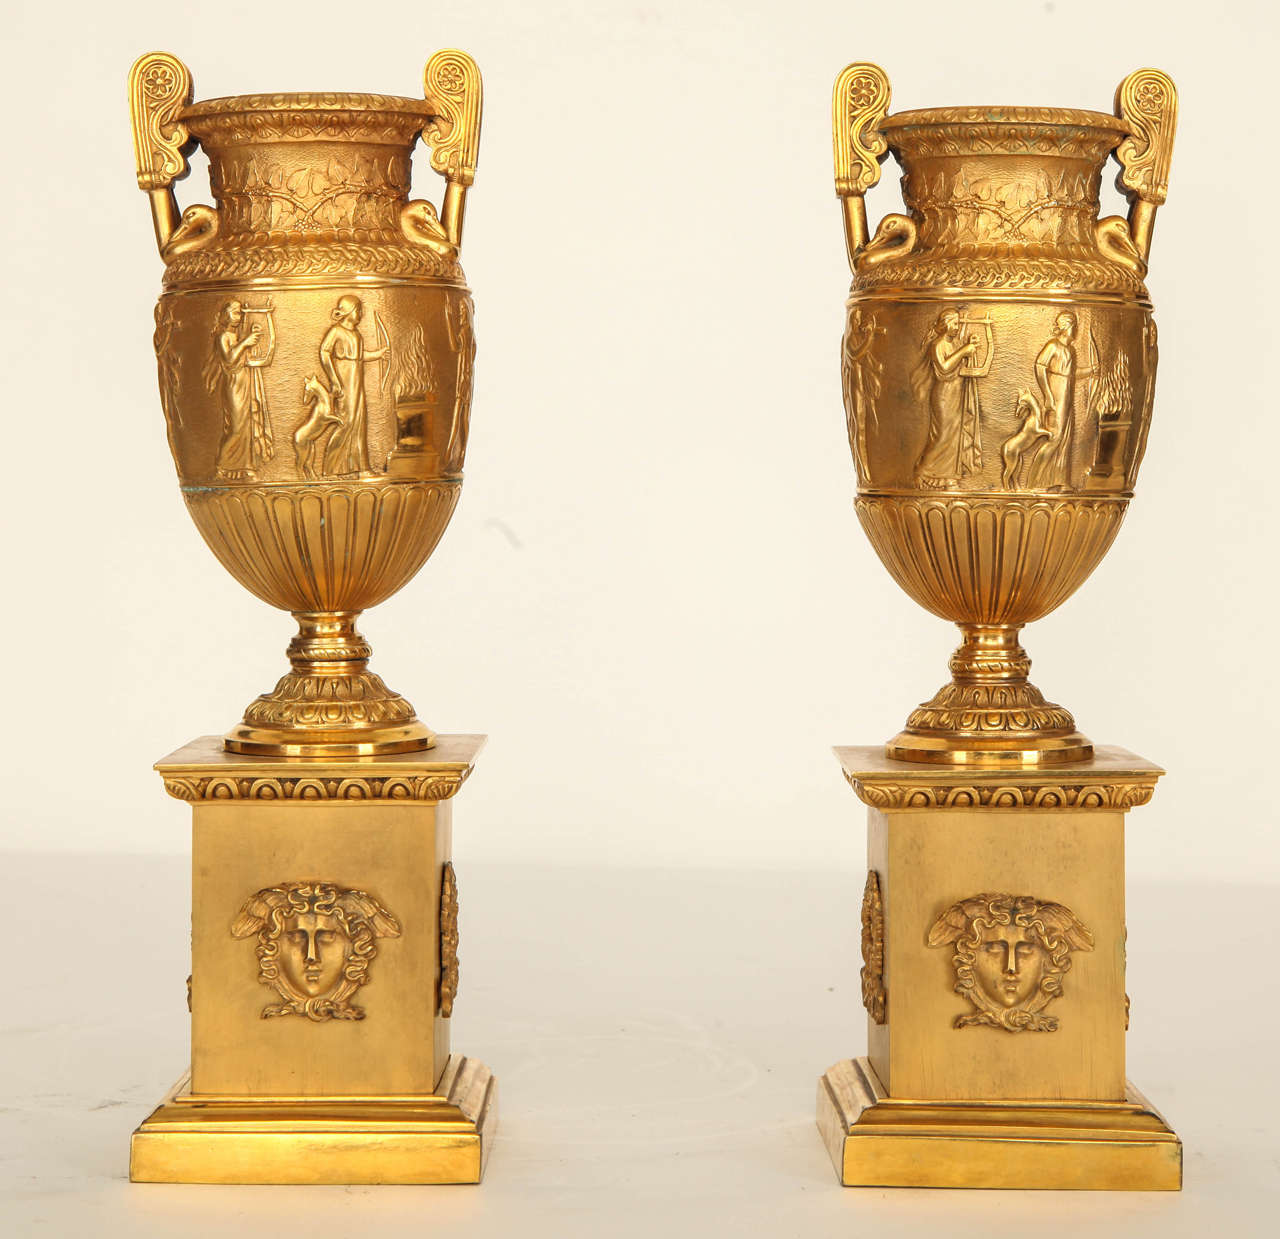 Pair of gilded bronze vases